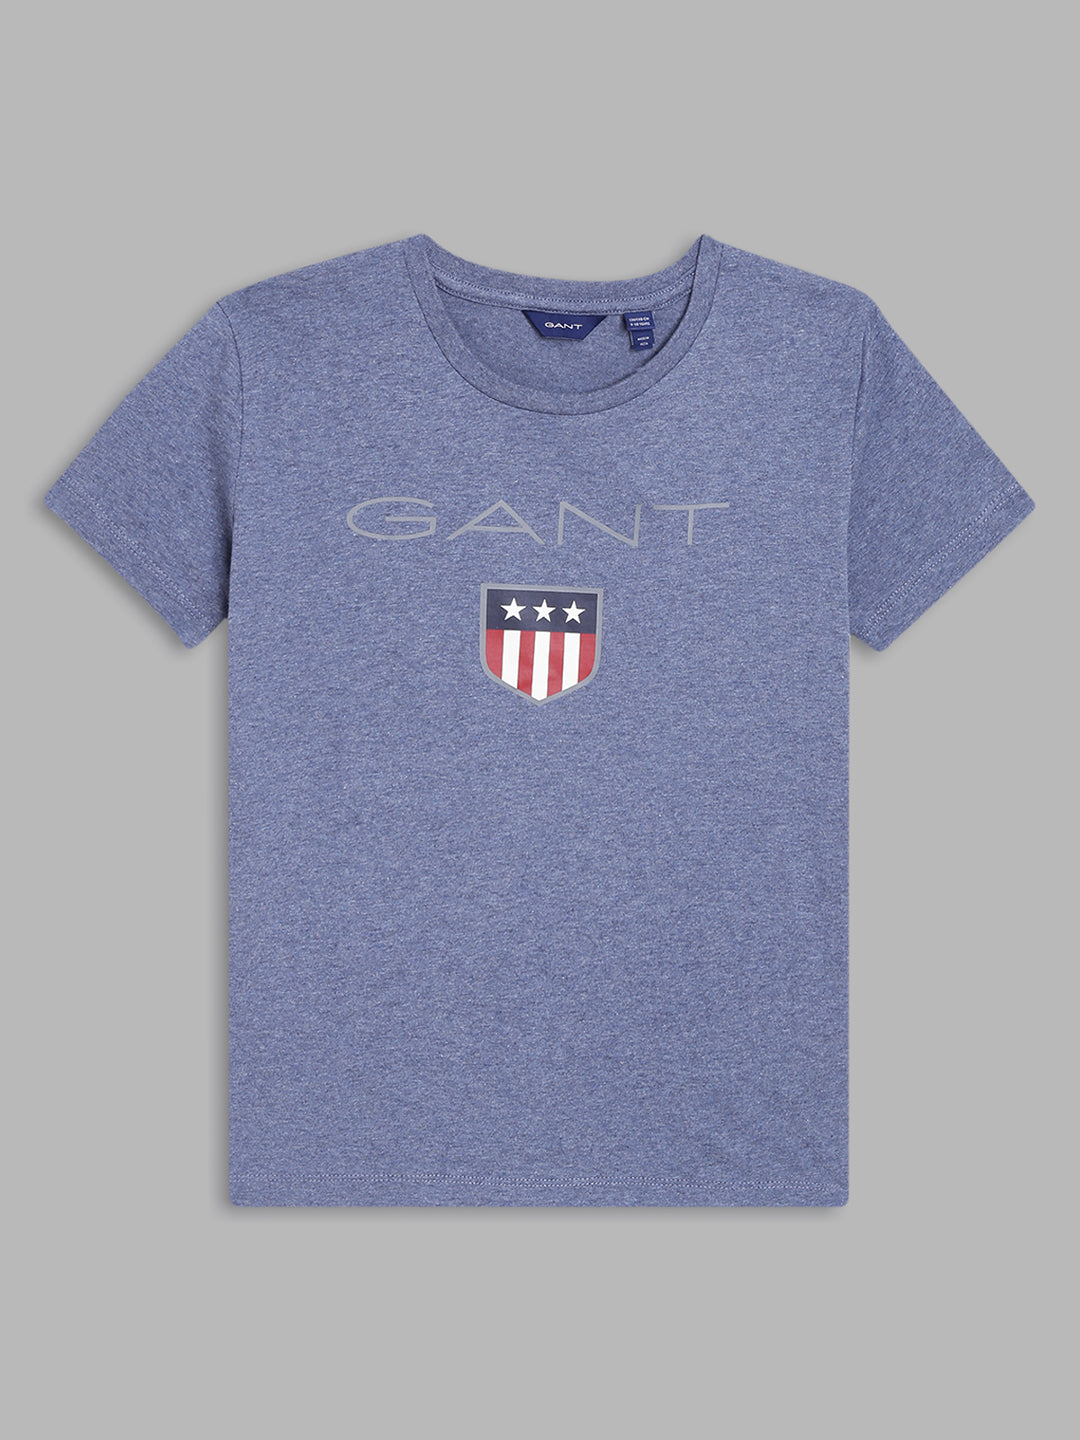 Gant Boys Blue Brand Logo Printed Cotton T-shirt